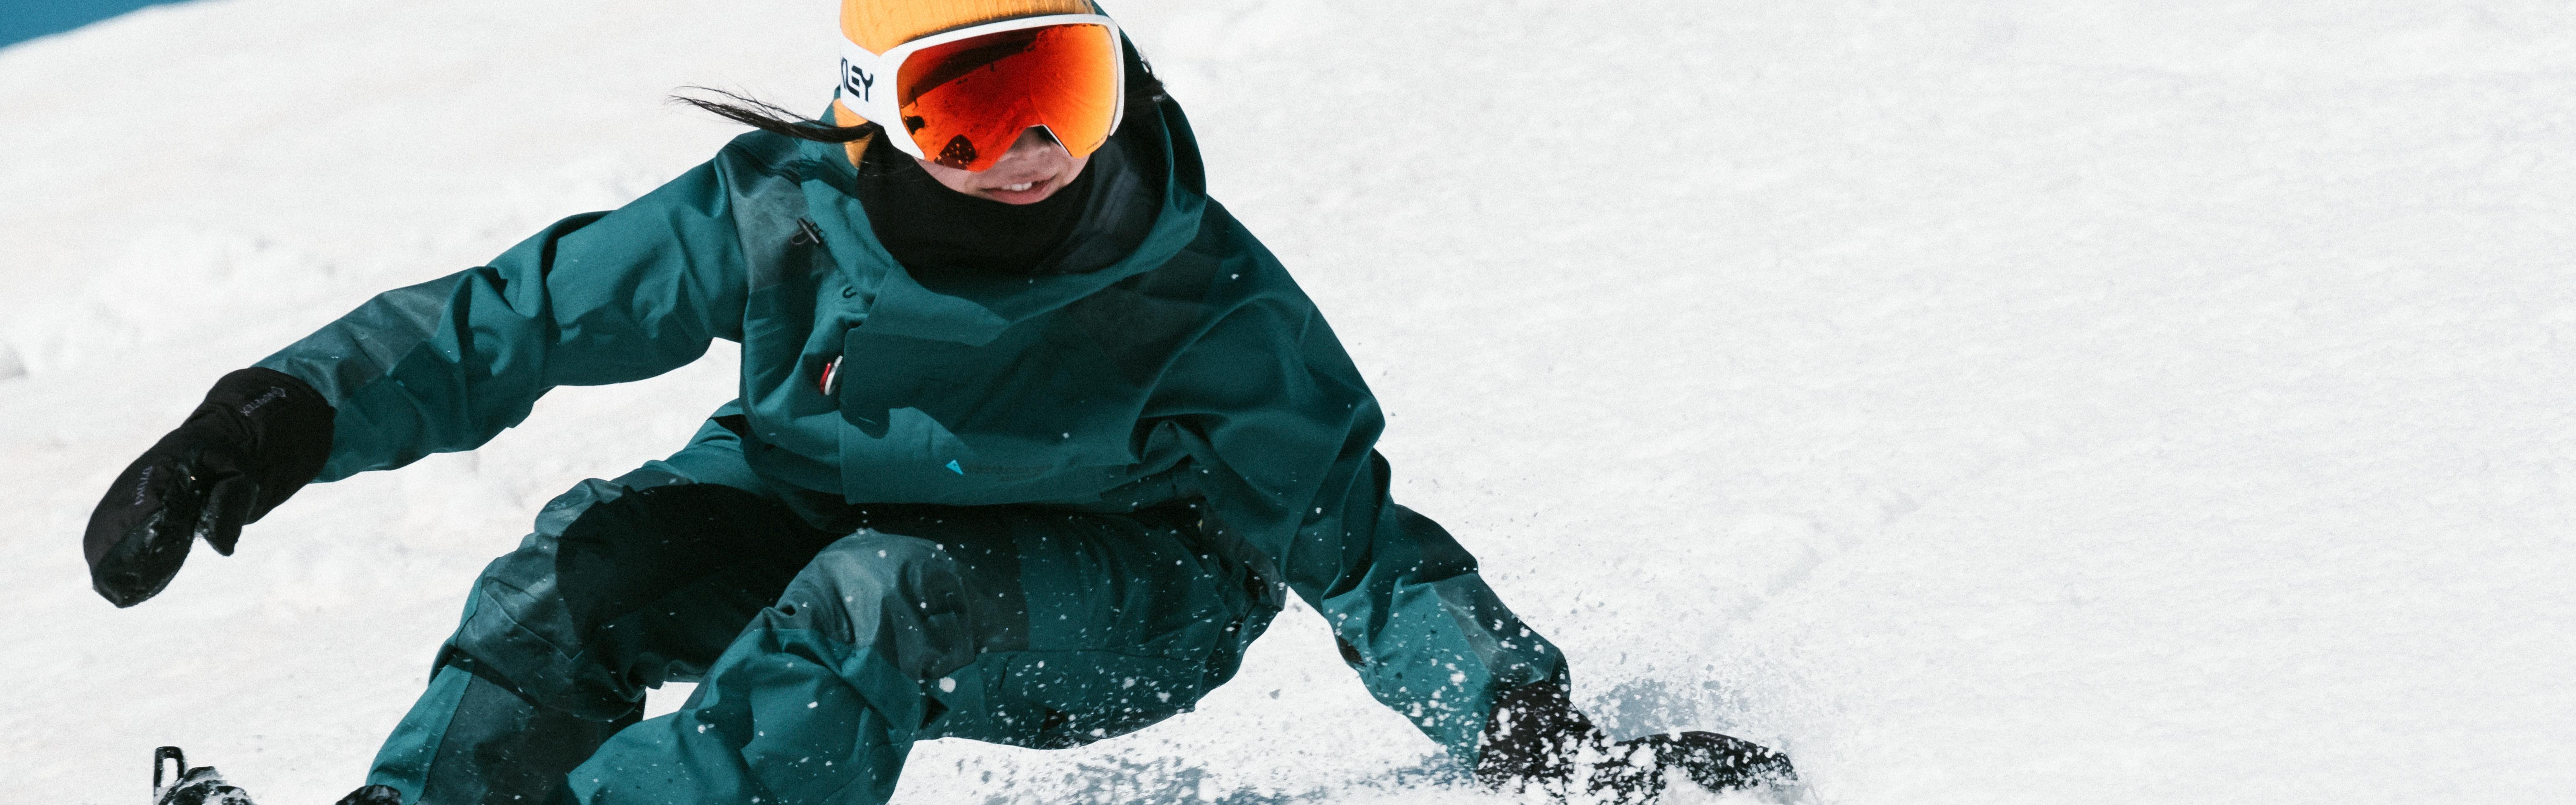 Ski pants versus bib pants: what is the best option for kids? – Ducksday